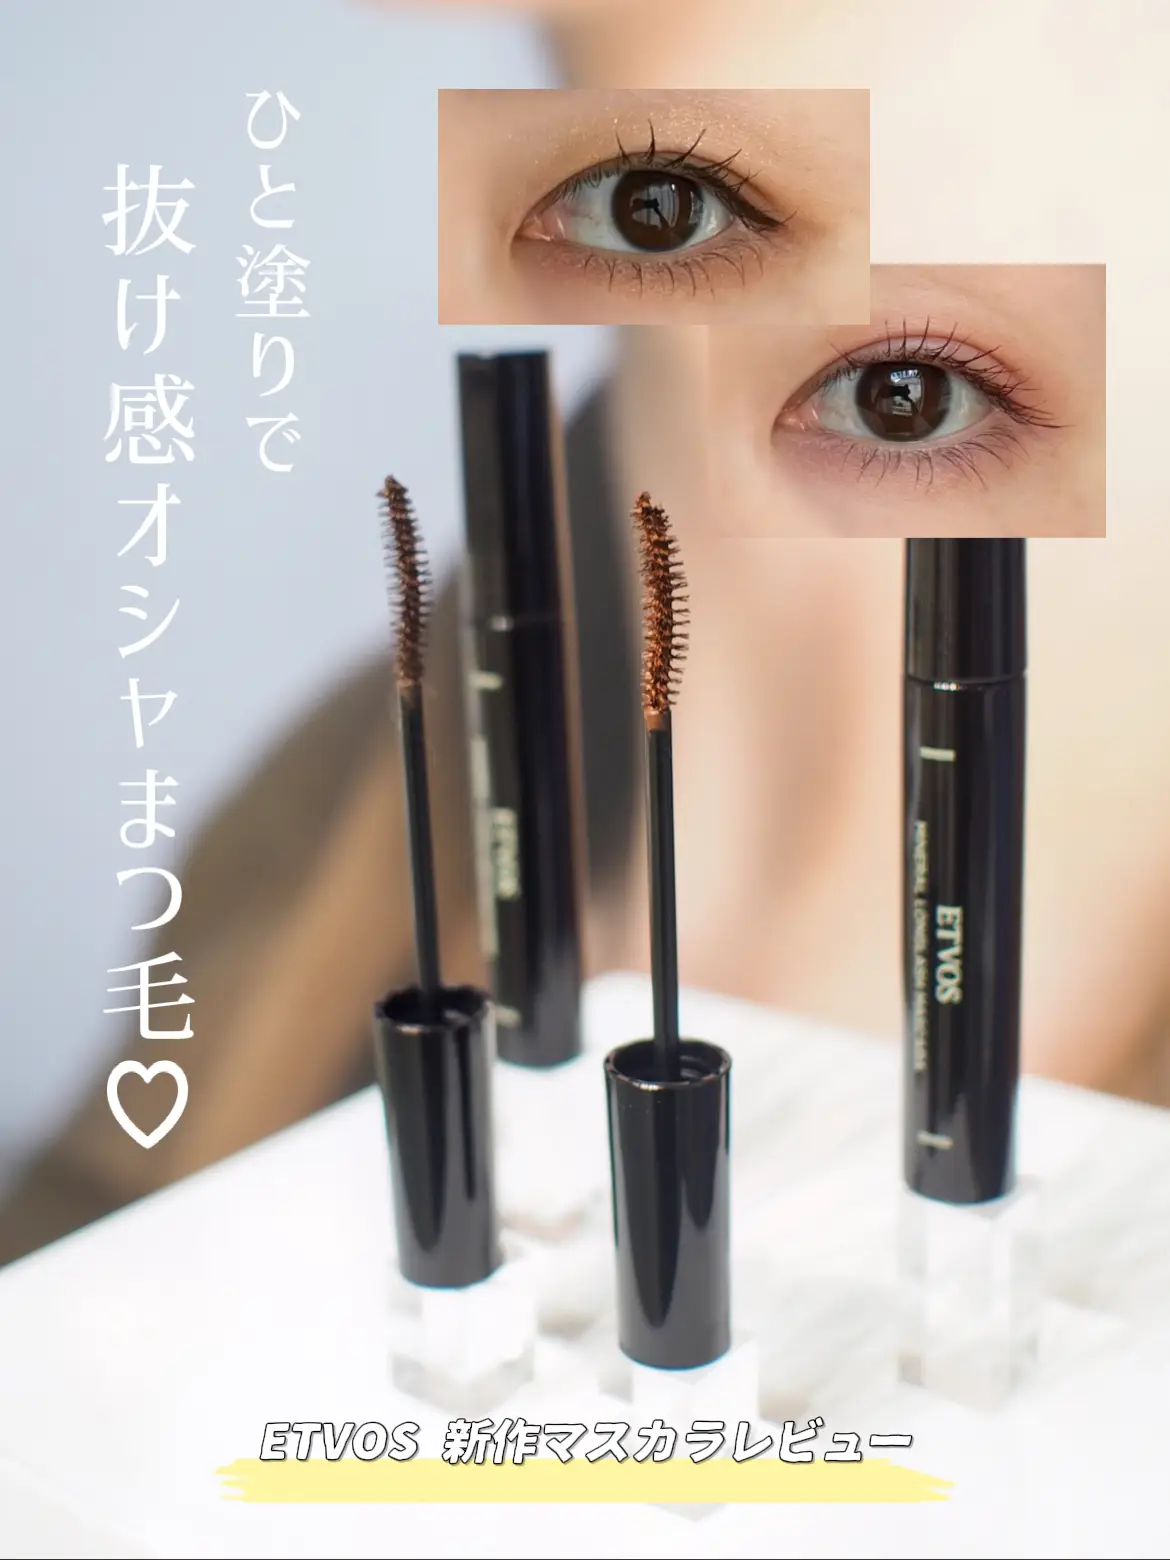 ETVOS new color mascara | Gallery posted by miyuki.A | Lemon8